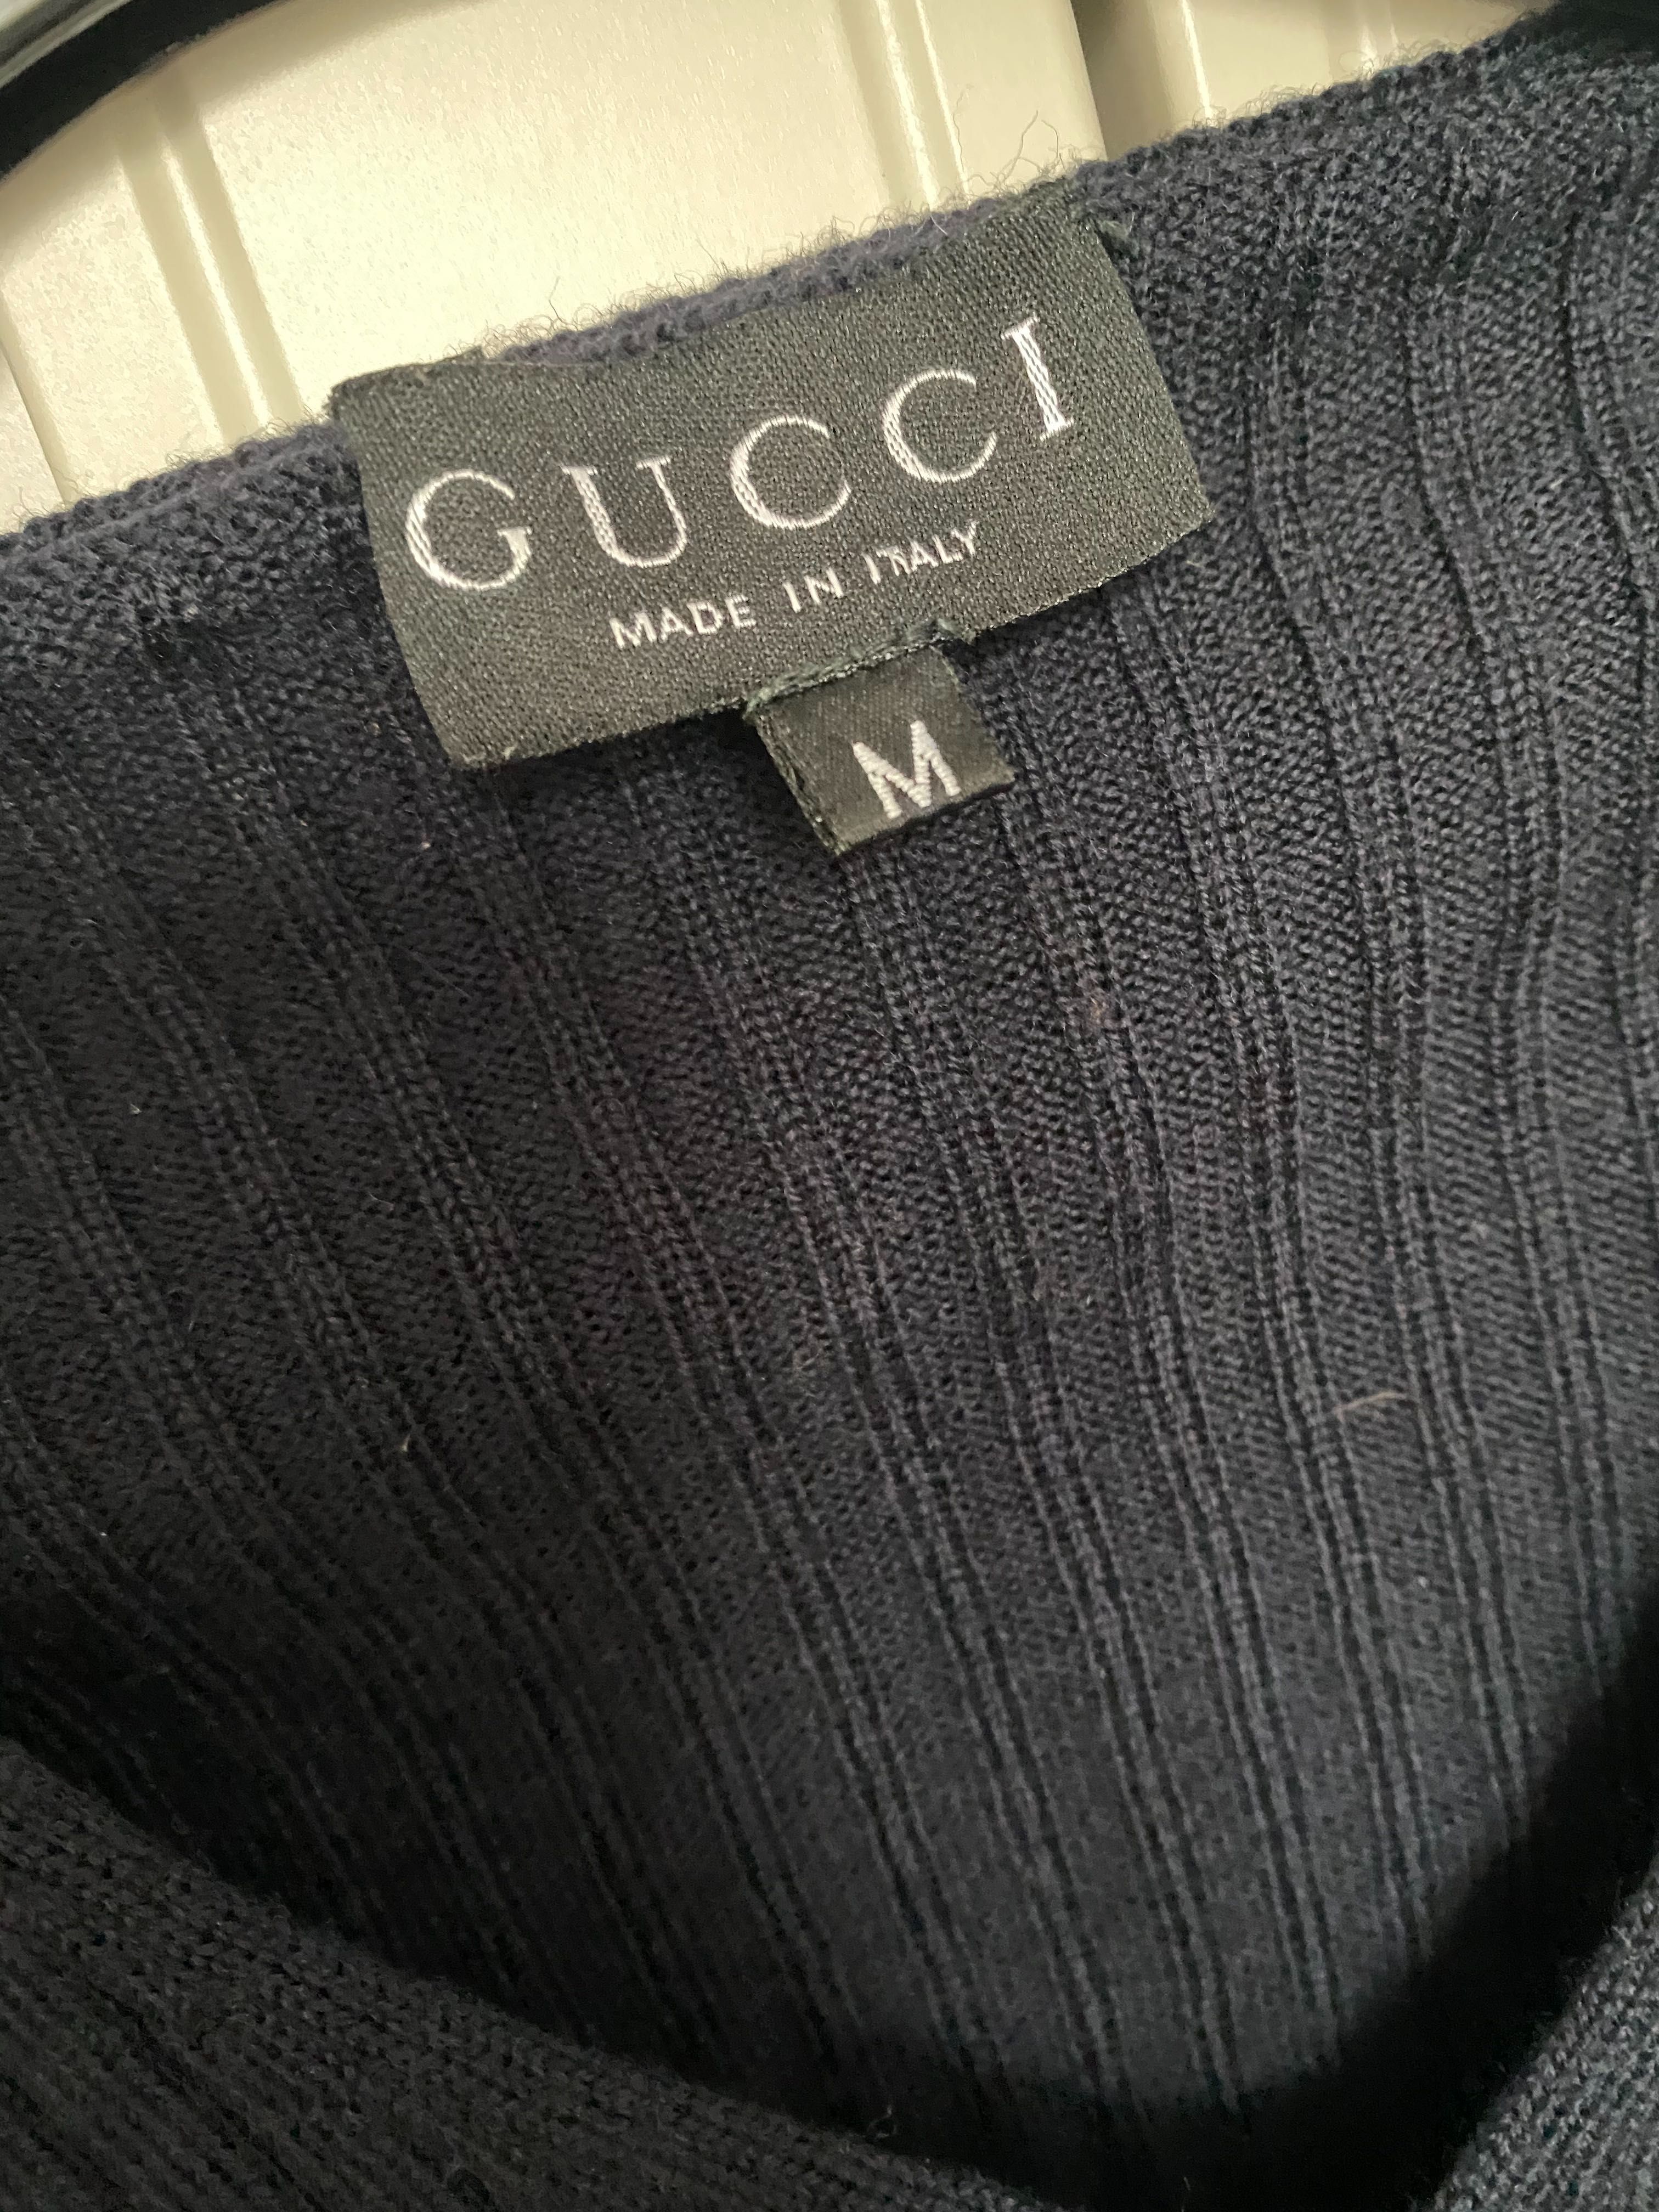 Puloverul Gucci original! 
100% lana virgina